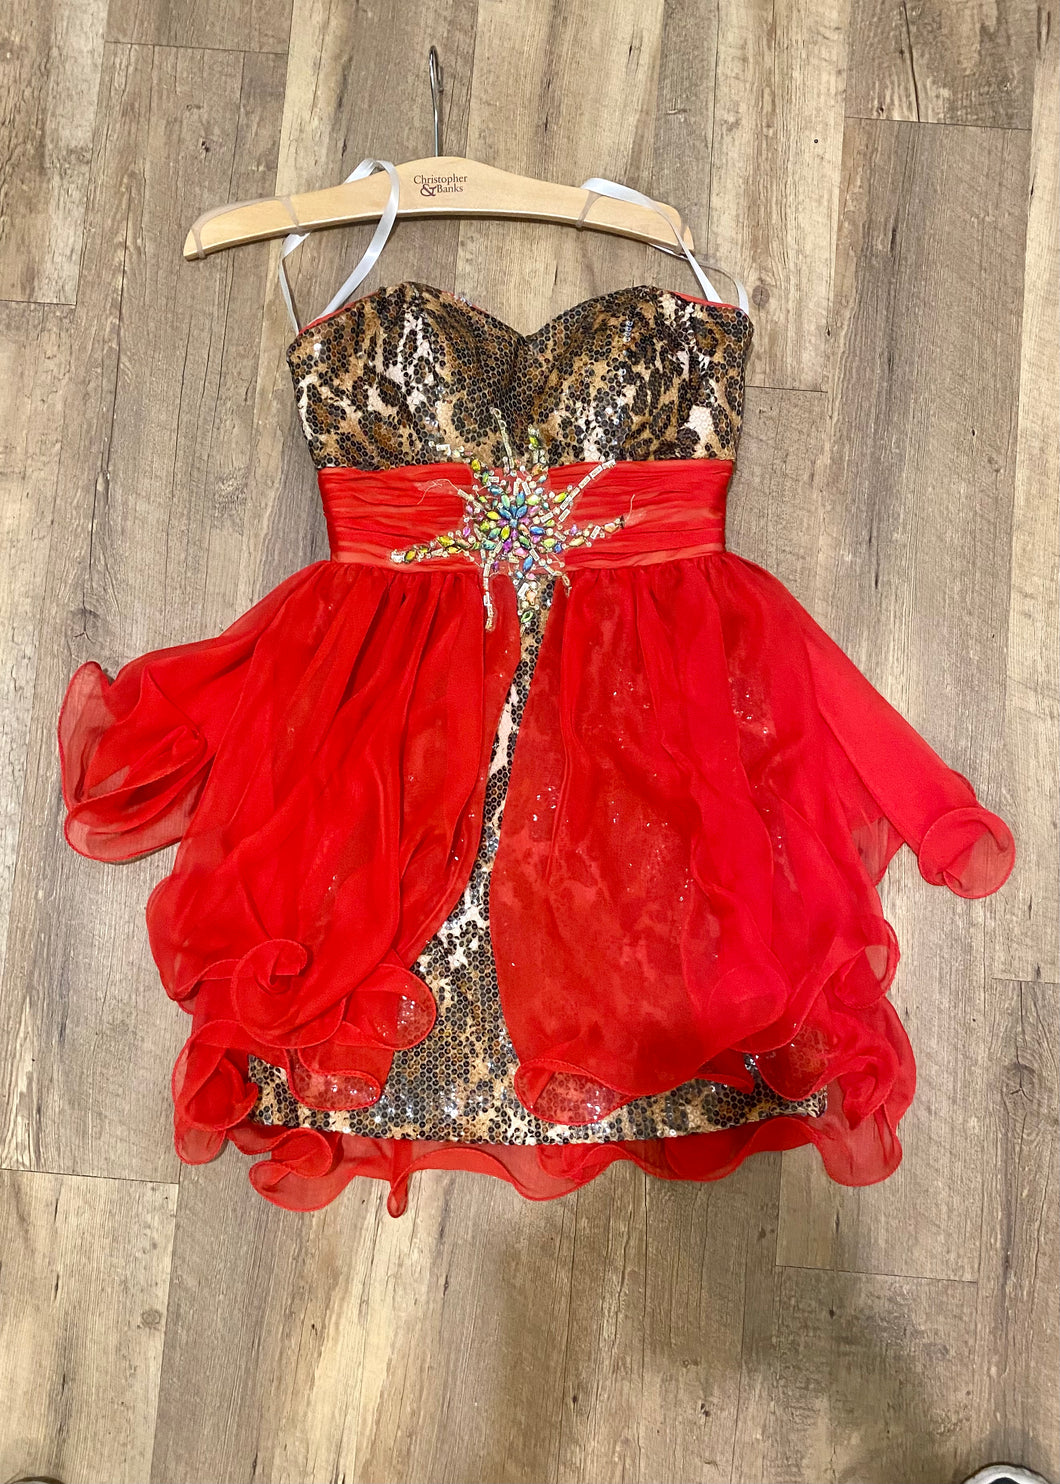 ELLA100-D Red Cheetah Gown. Size 2/4